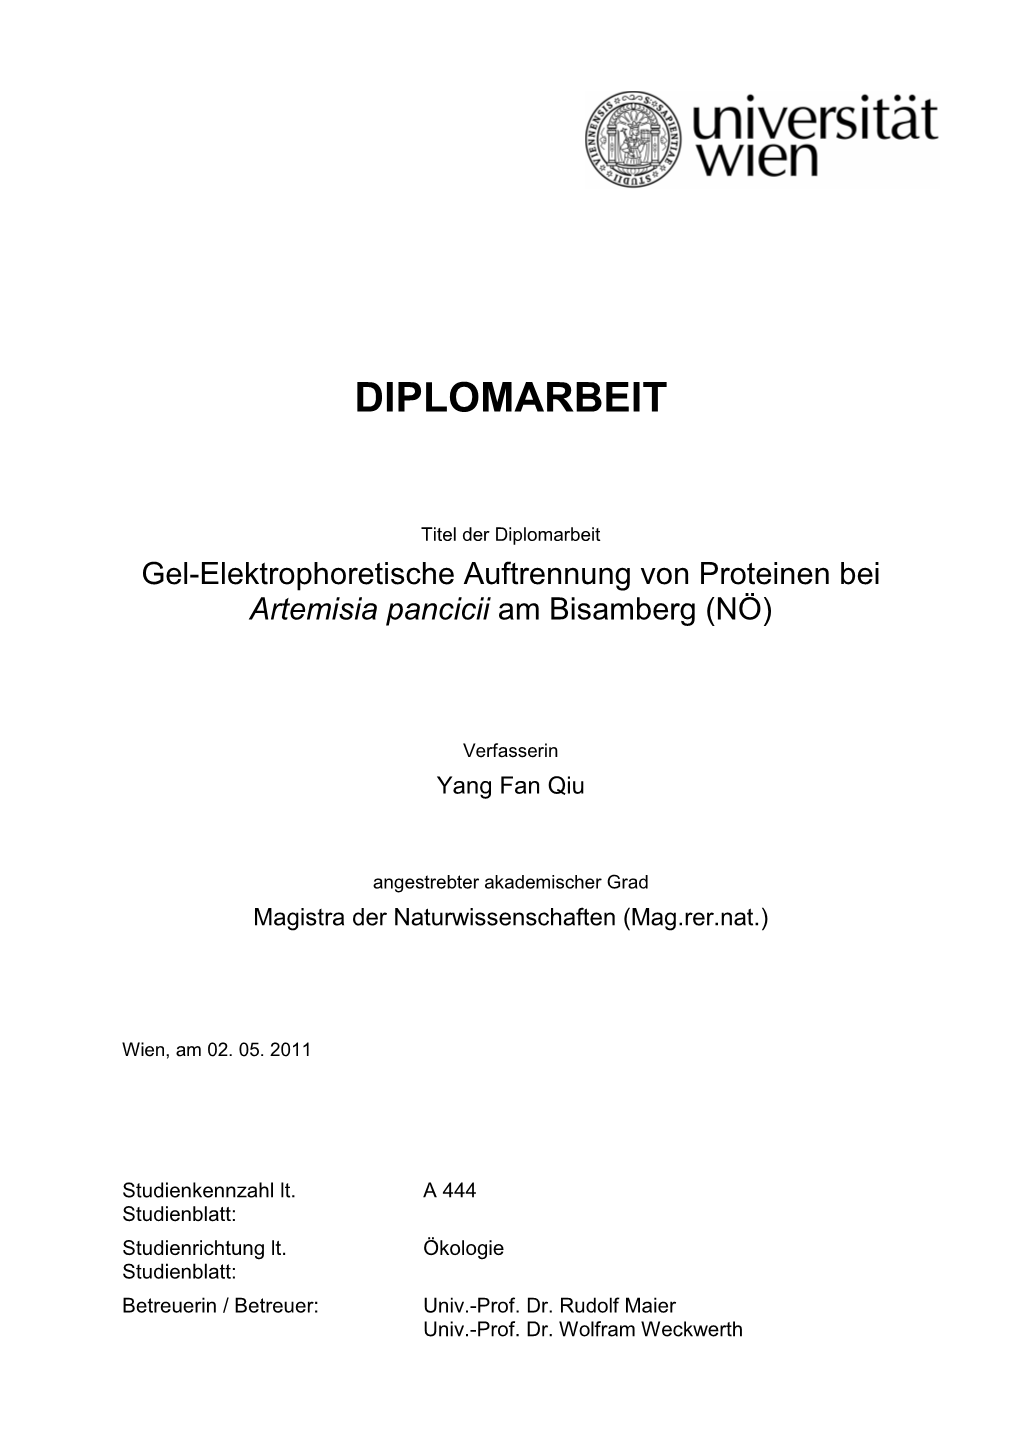 Diplomarbeit Endversion 02.05.11